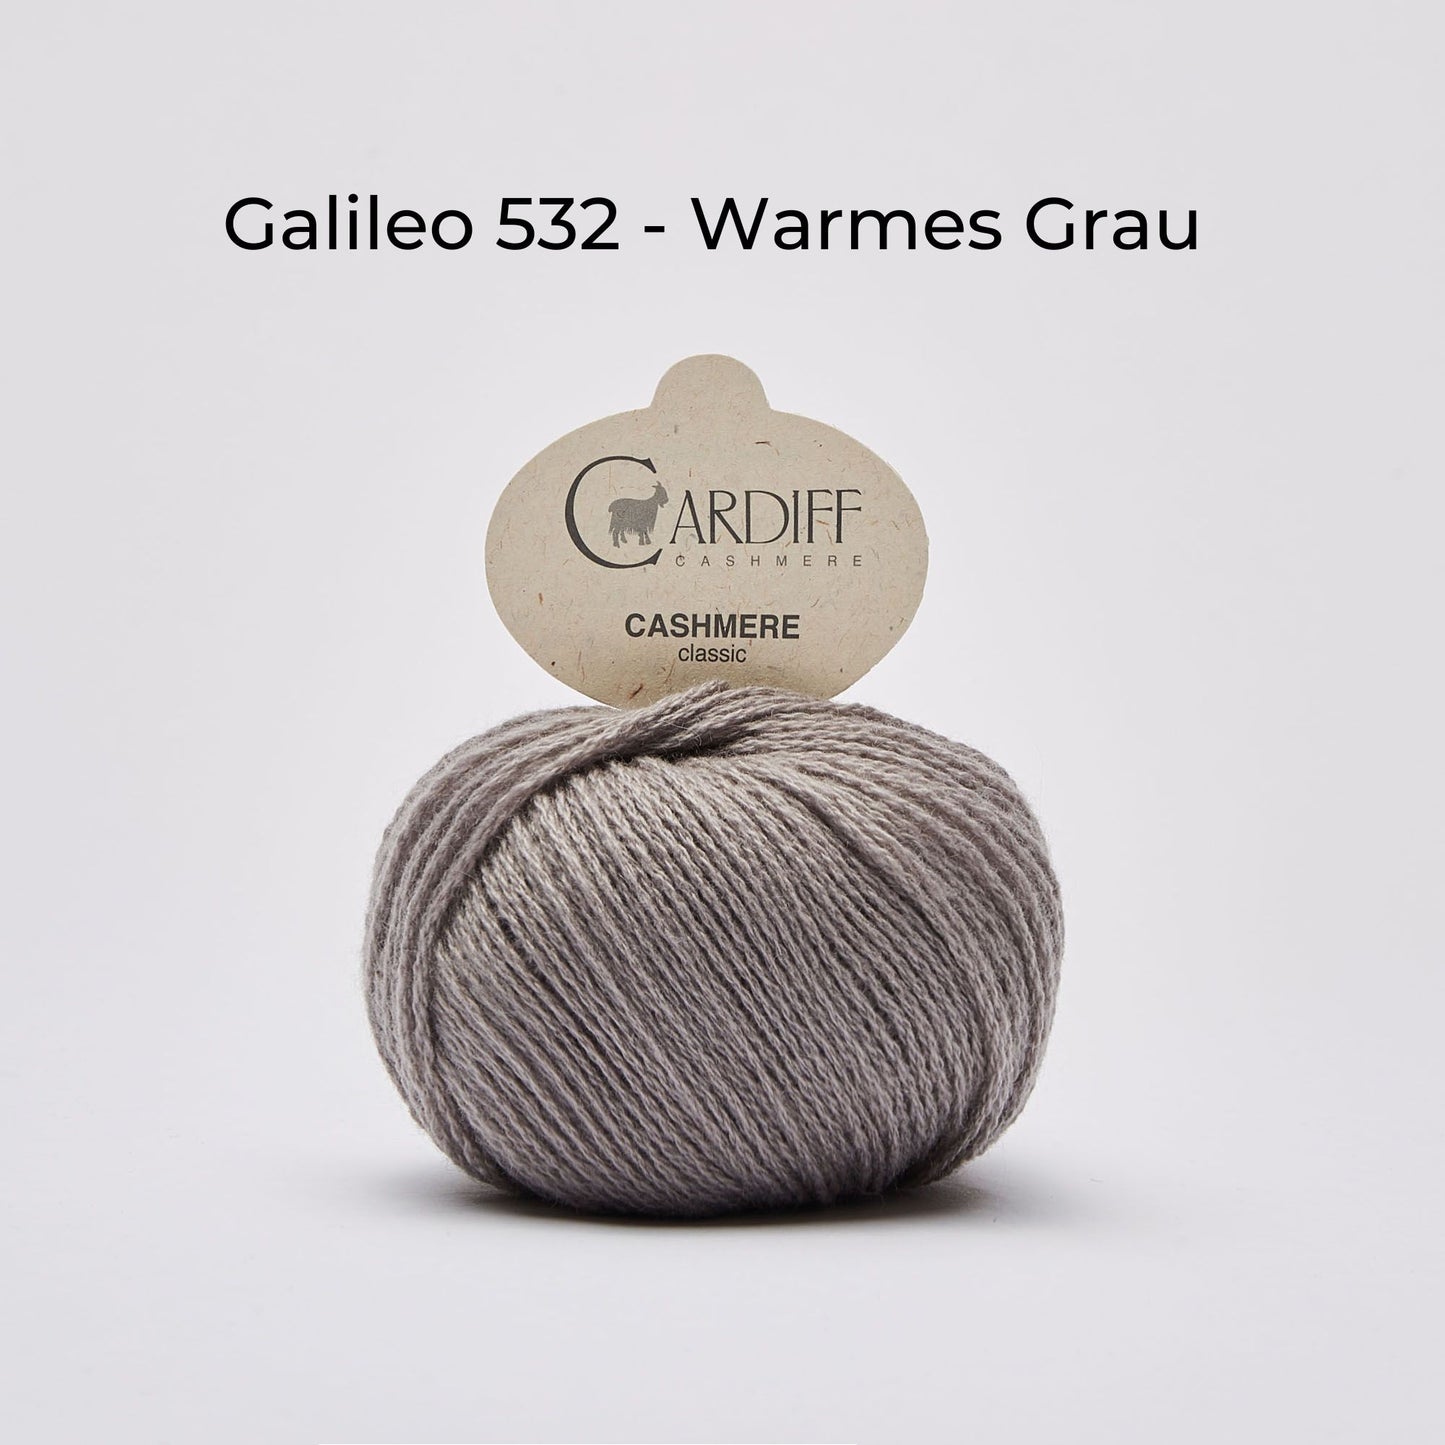 Wollknäuel, Cardiff Cashmere Classic, Farbe Galileo 532, warmes Grau